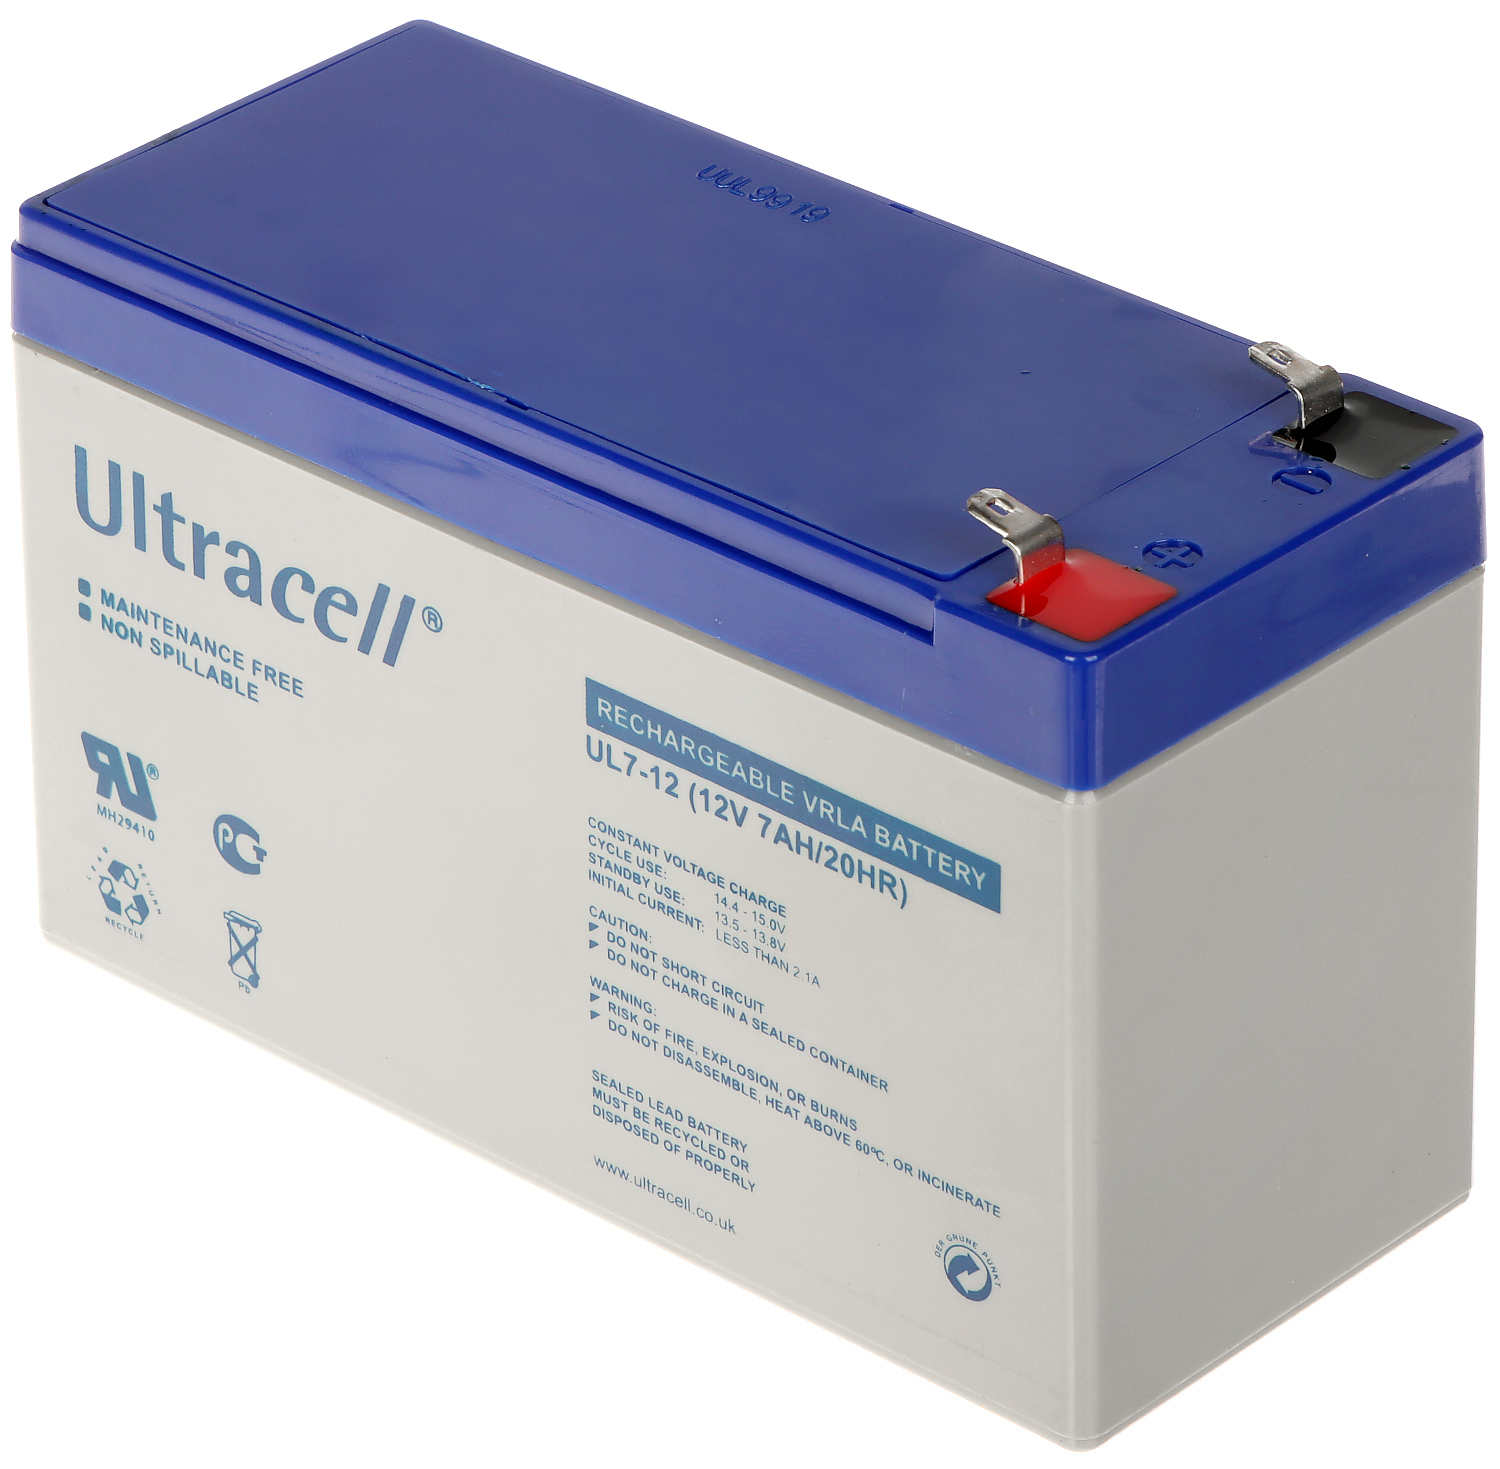 BATERIA 12V/7AH-UL ULTRACELL - Capacidade da bateria até 9Ah - Delta